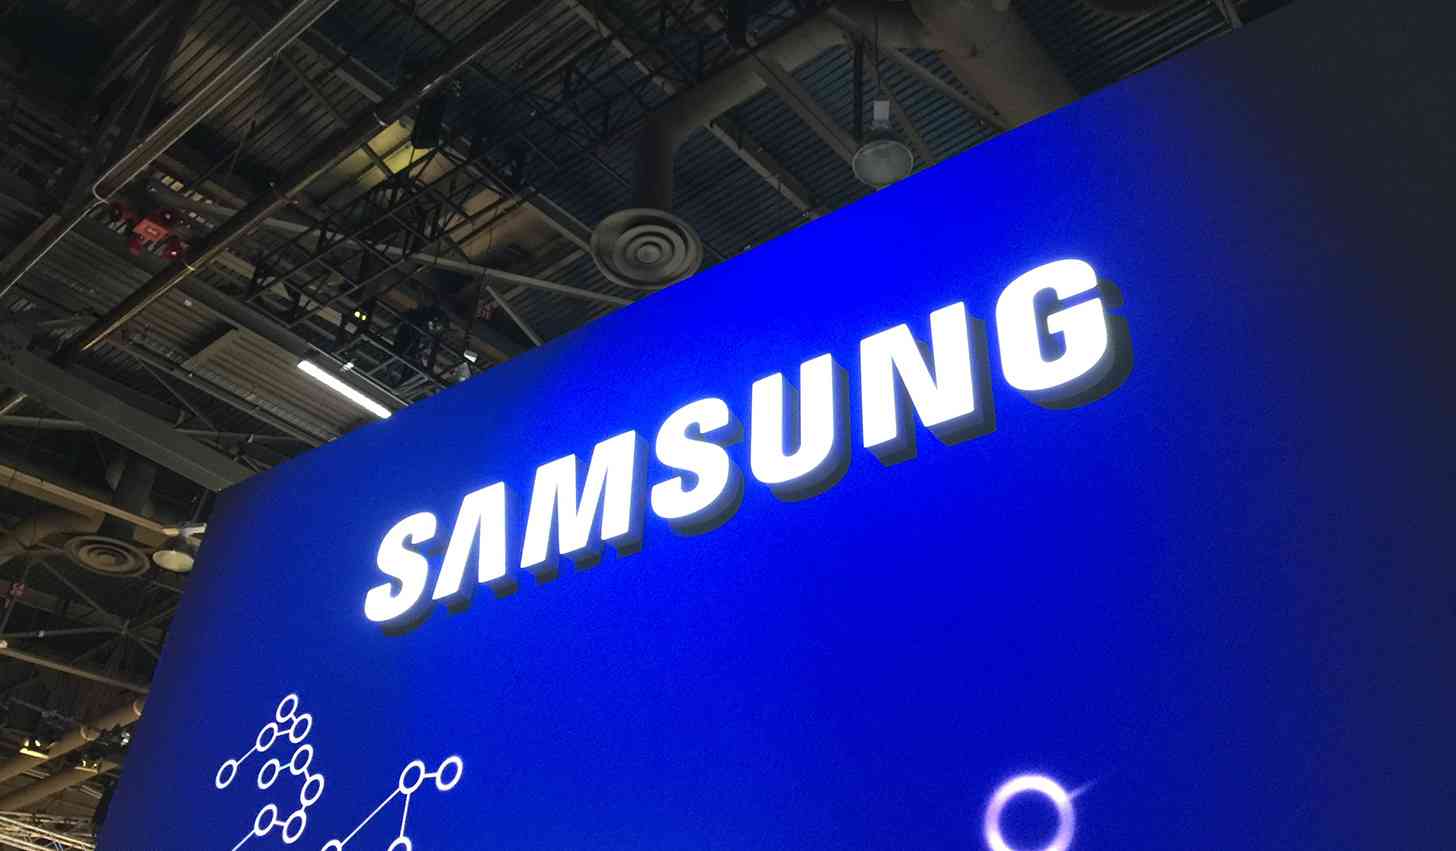 Samsung logo CES 2015 booth